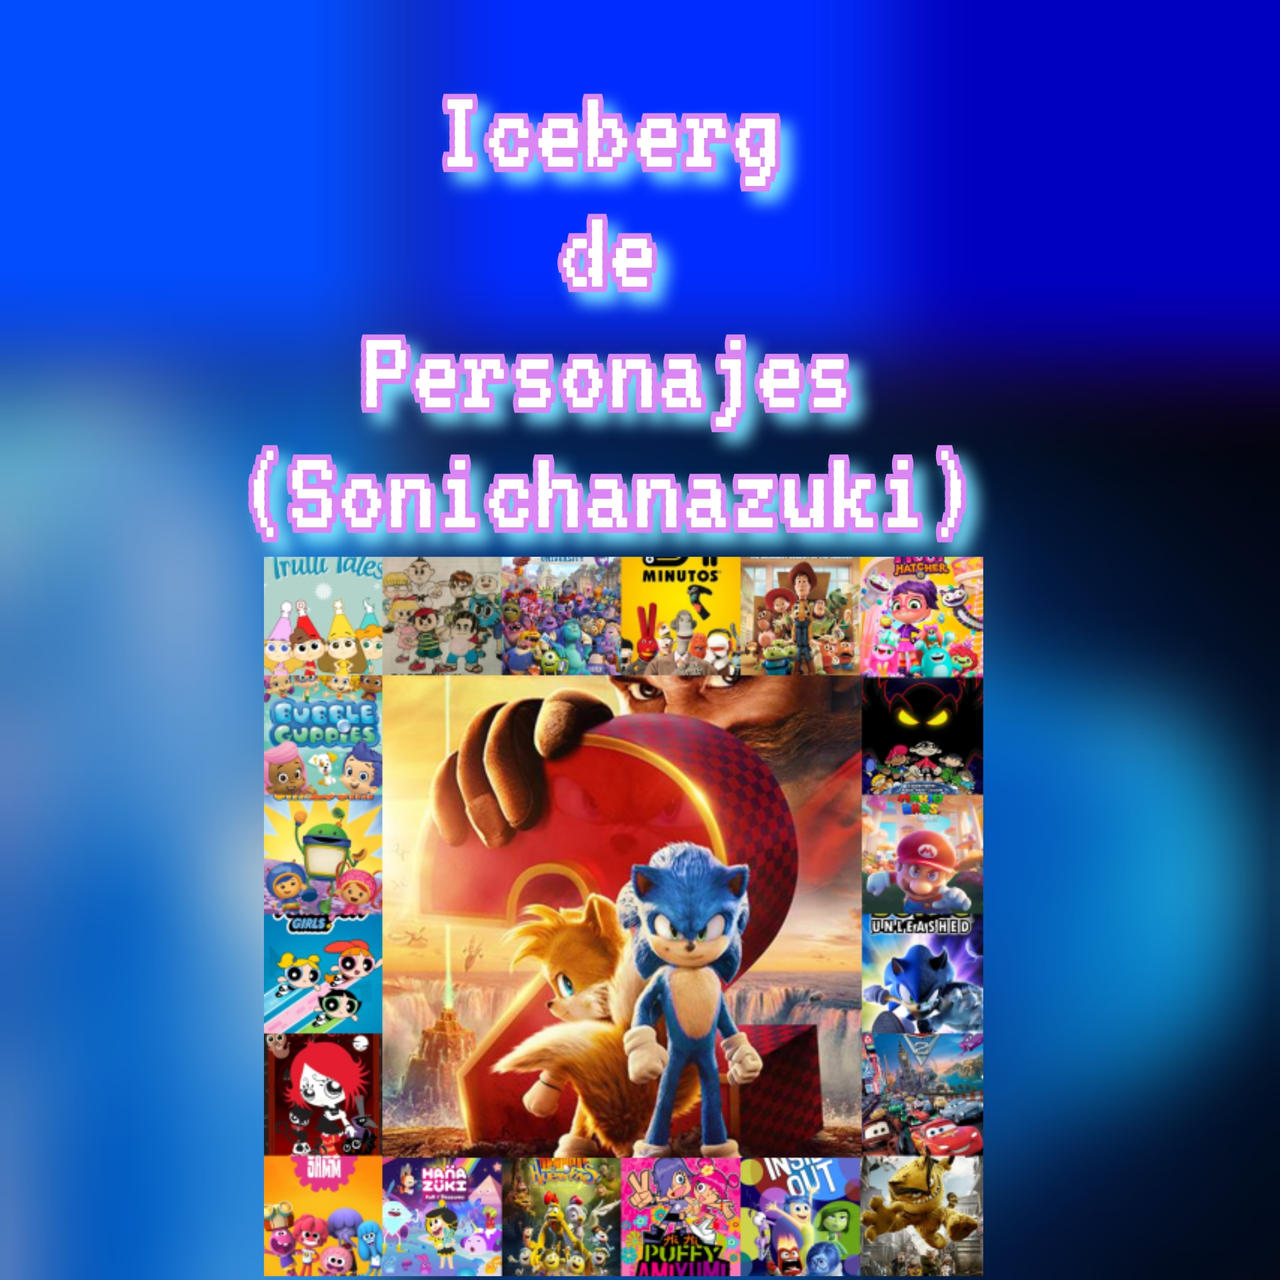 Trulli tales Accepts Sonic's Apology by Sonichanazuki on DeviantArt